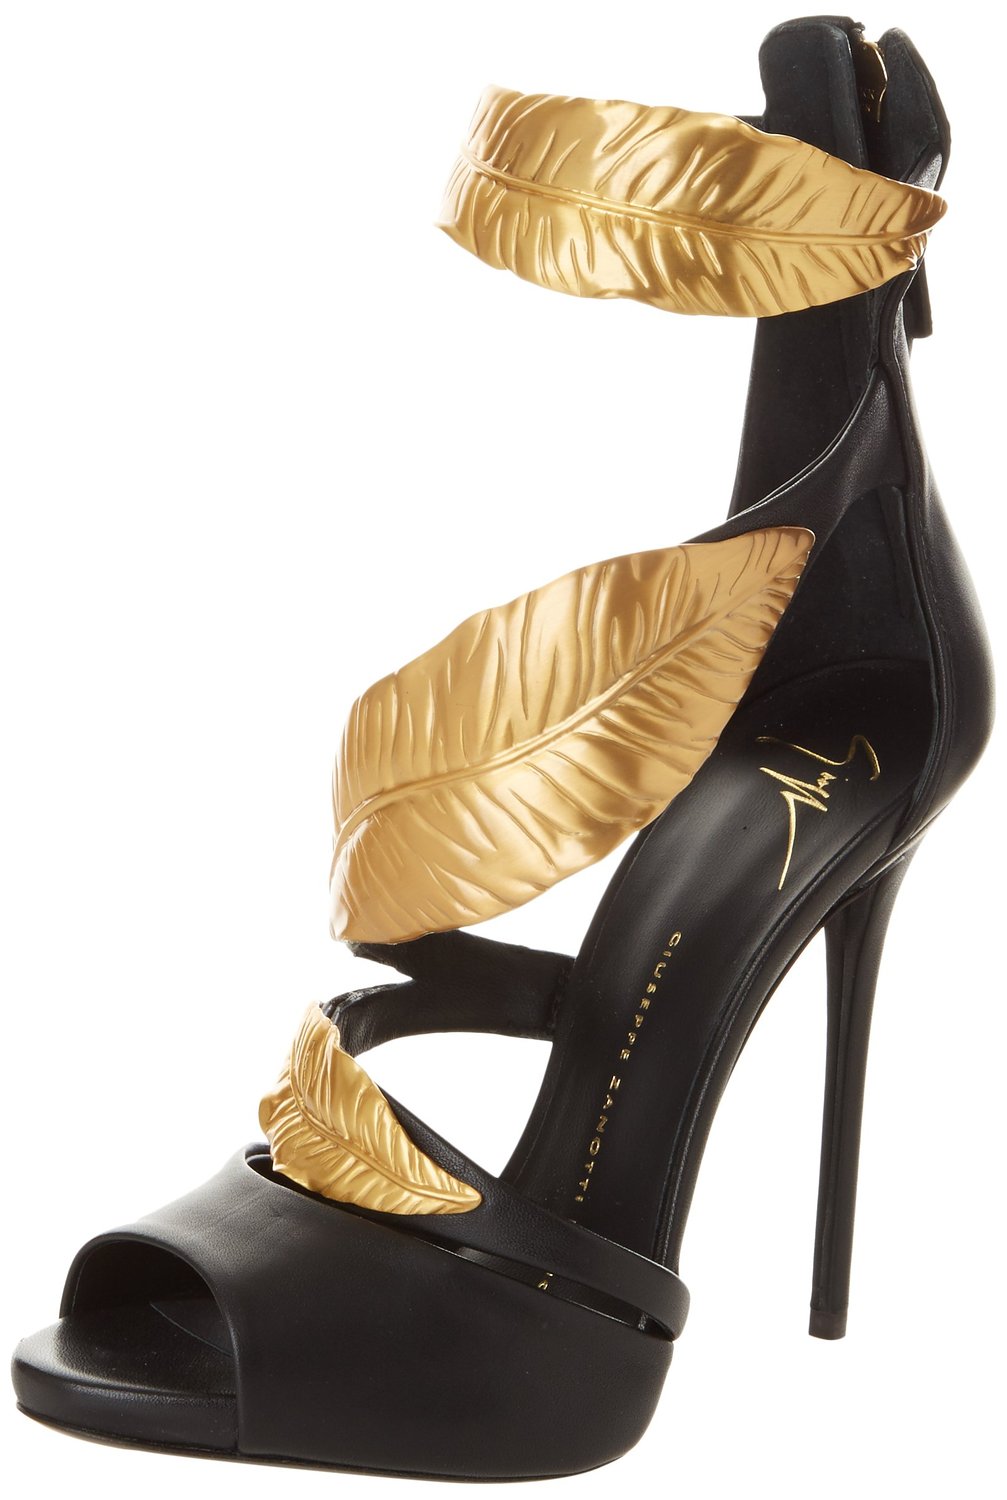 Giuseppe Zanotti Womens Gold Leaf Peep-Toe Dress Sandal